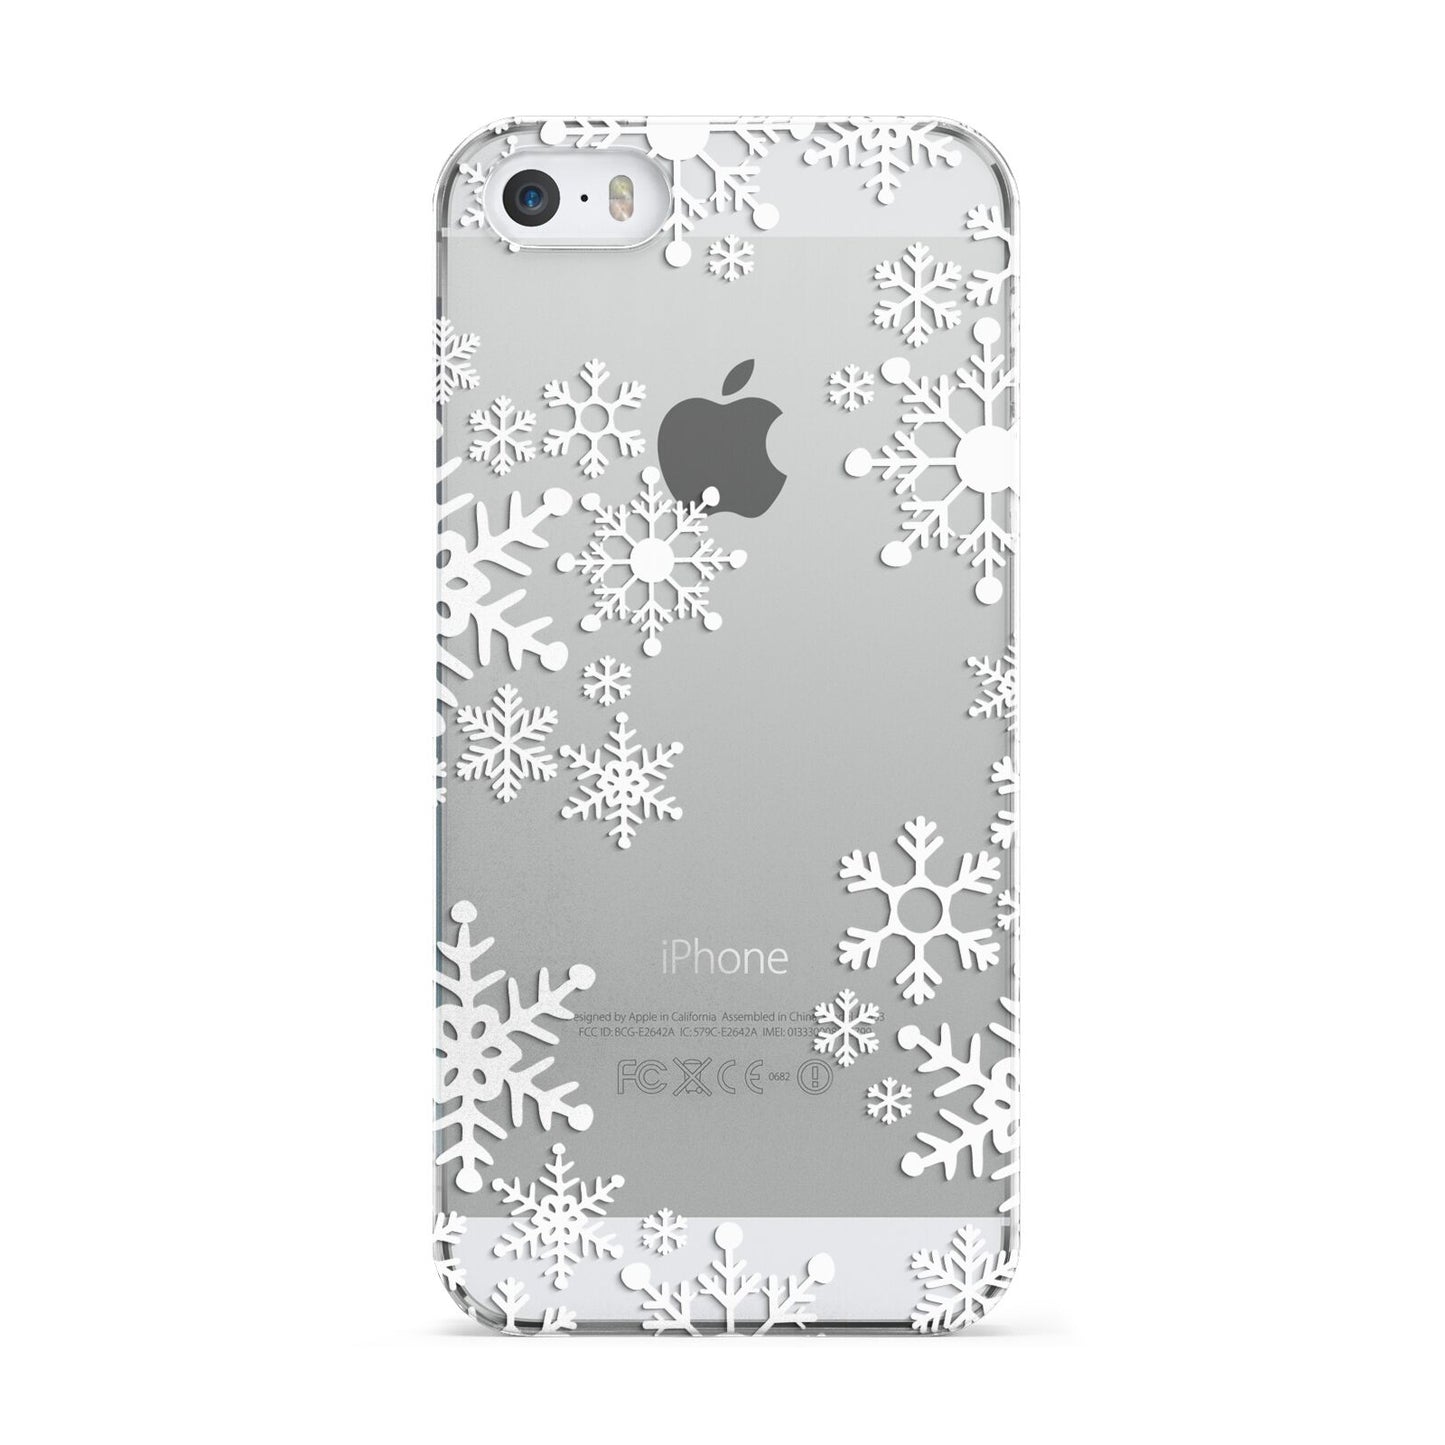 Snowflake Apple iPhone 5 Case